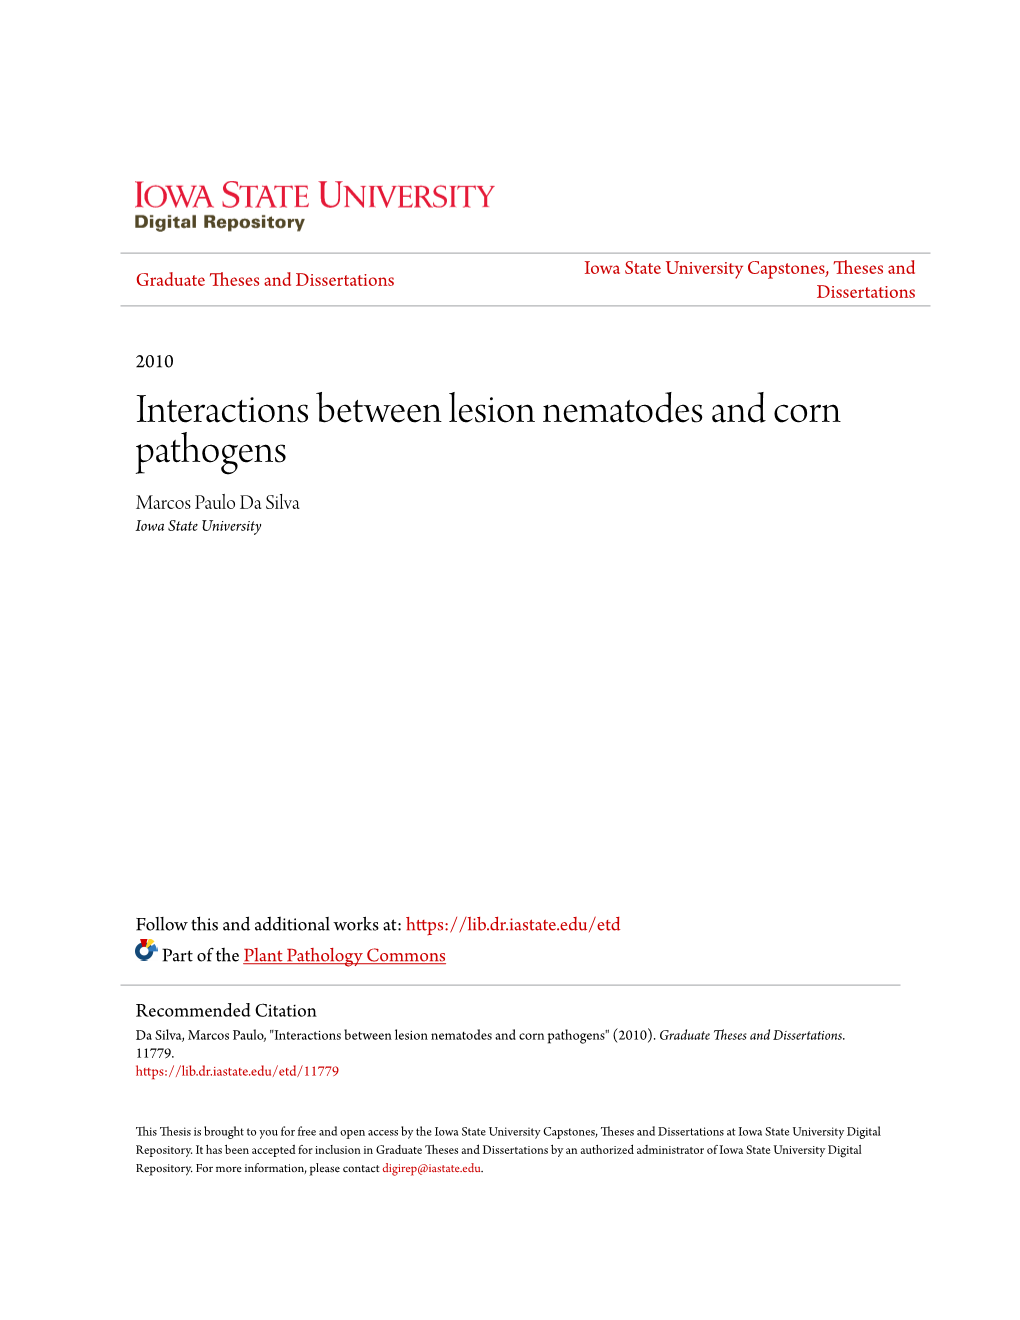 Interactions Between Lesion Nematodes and Corn Pathogens Marcos Paulo Da Silva Iowa State University